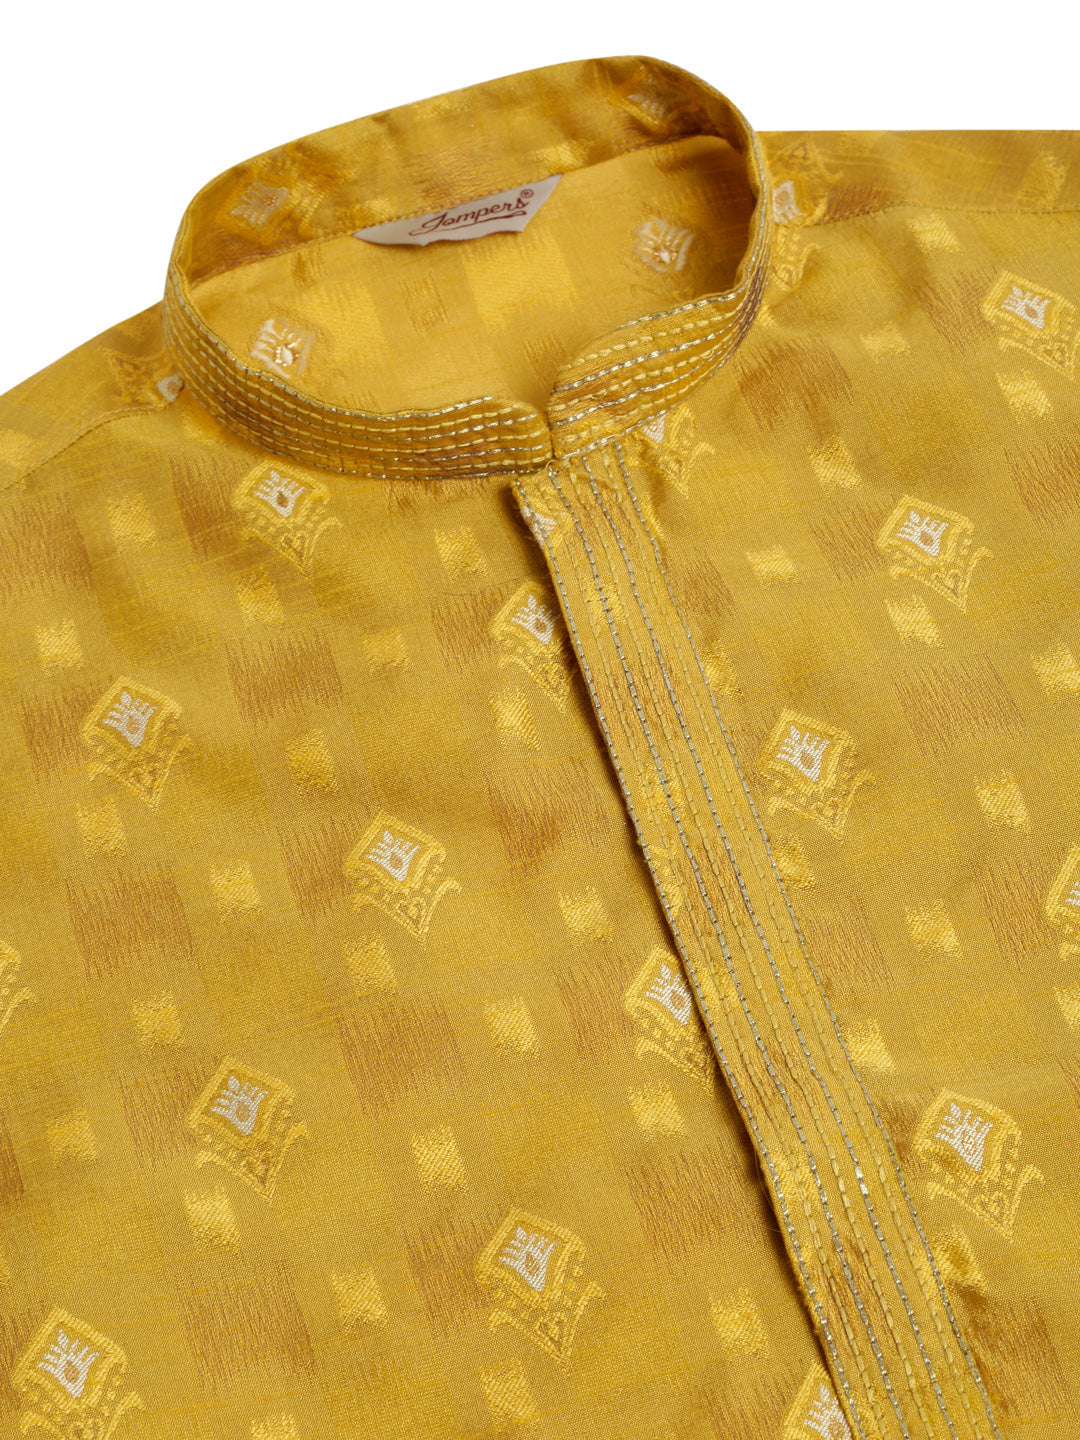 Men's Mustard Collar Embroidered Woven Design Kurta Pyjama ( Ko 672 Mustard ) - Virat Fashions